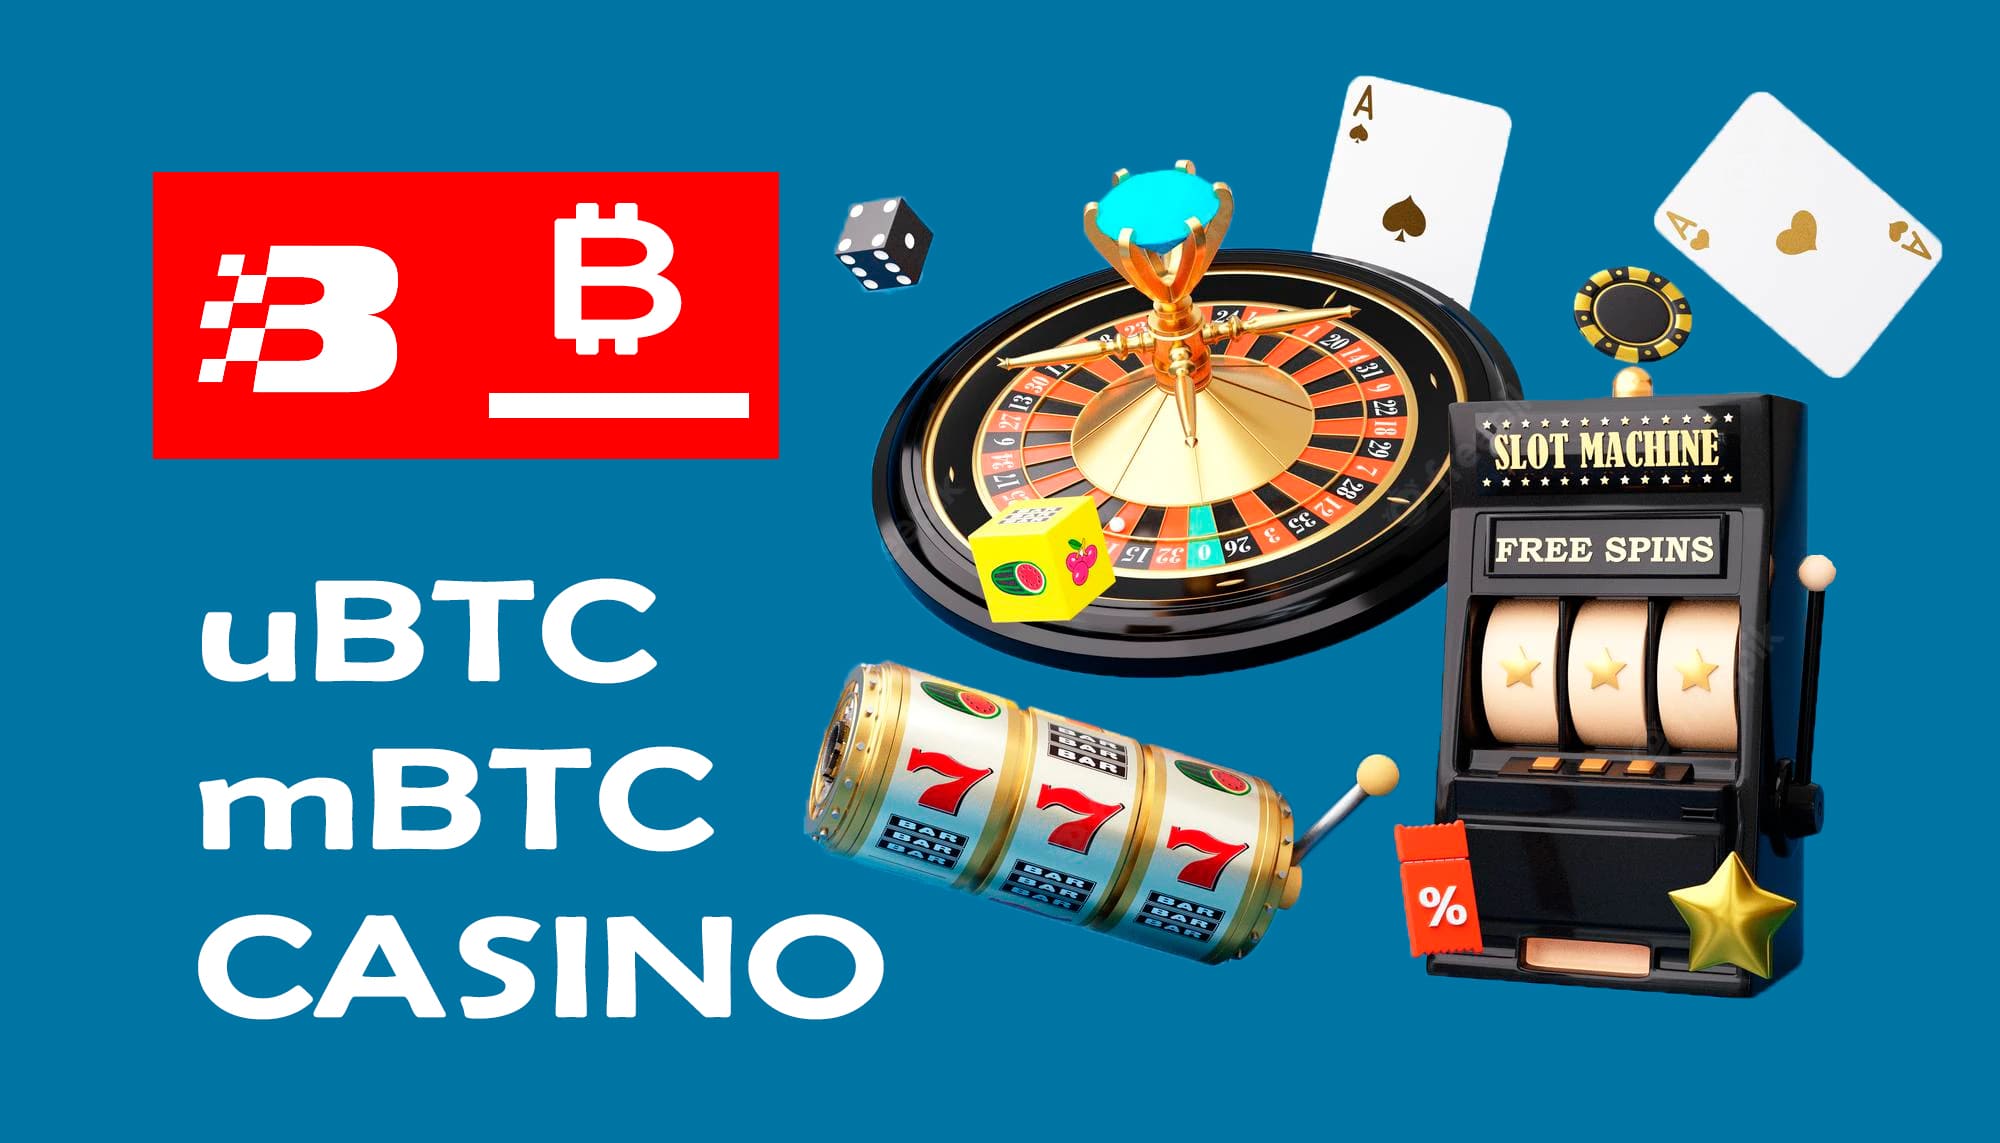 ubtc and mbtc casino